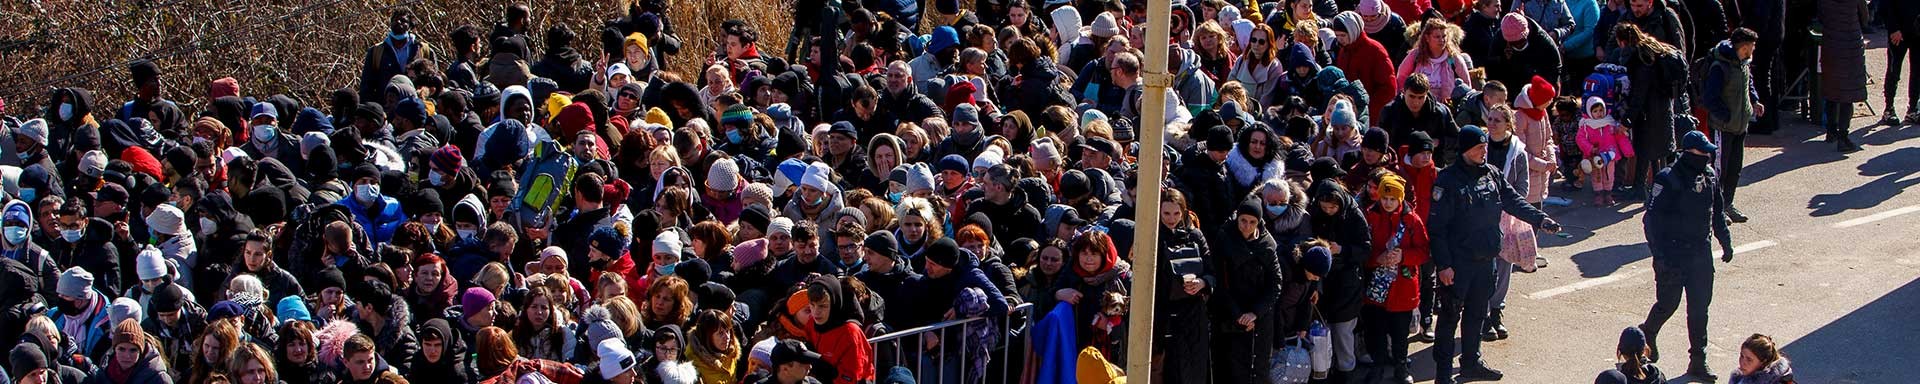 UZHHOROD, UKRAINE - FEBRUARY 27, 2022 - People crowd at the Uzhhorod-Vysne Nemecke checkpoint on the Ukraine-Slovakia border, Zakarpattia Region, western Ukraine.  — Photo by Ukrinform